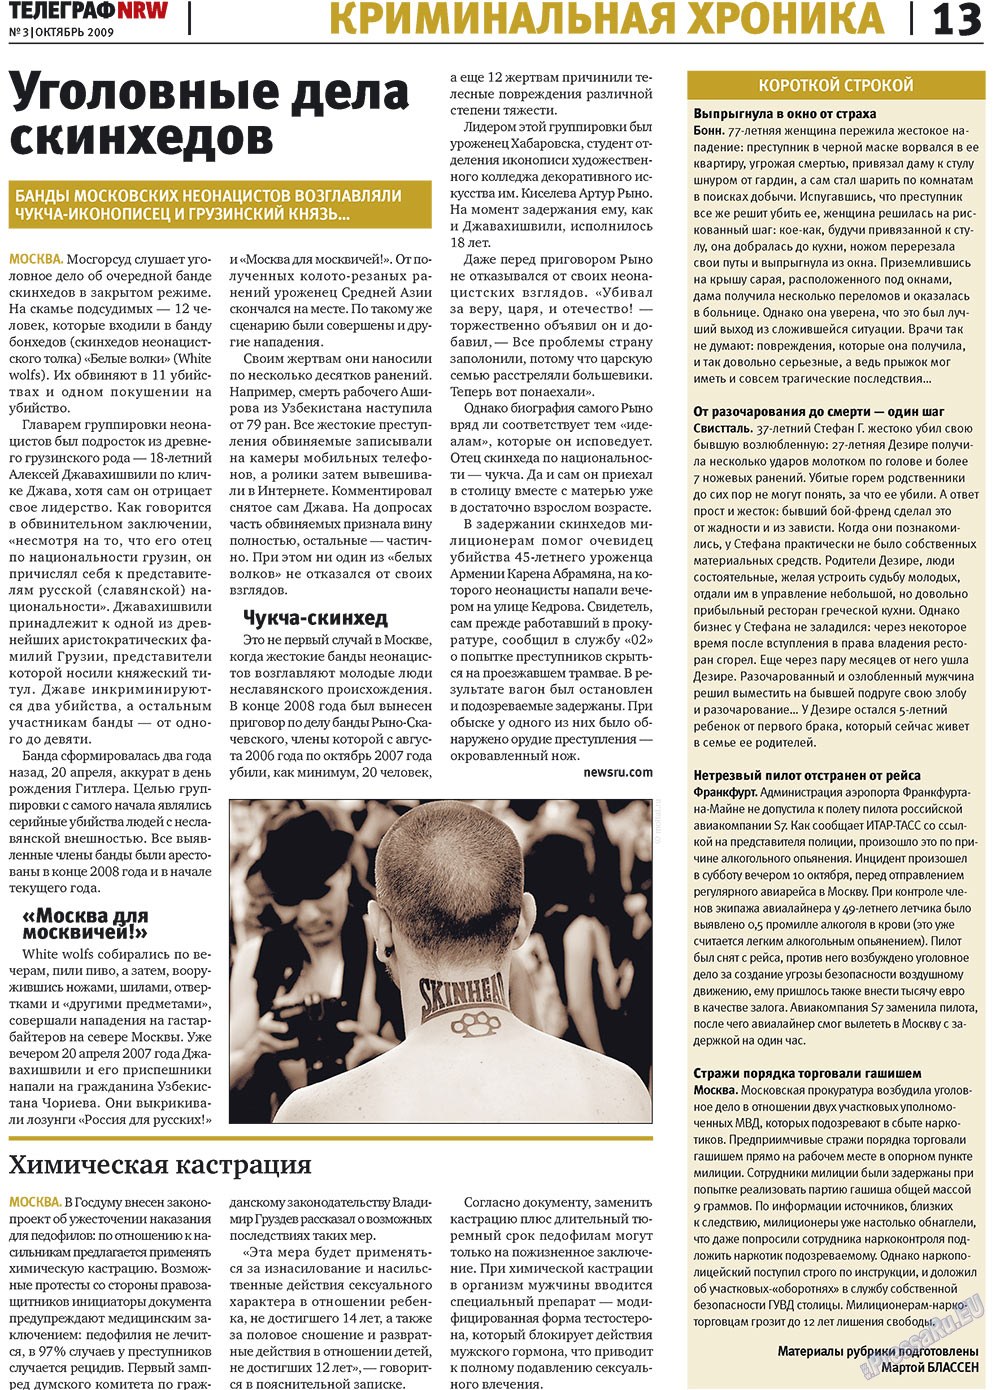 Телеграф NRW, газета. 2009 №3 стр.13